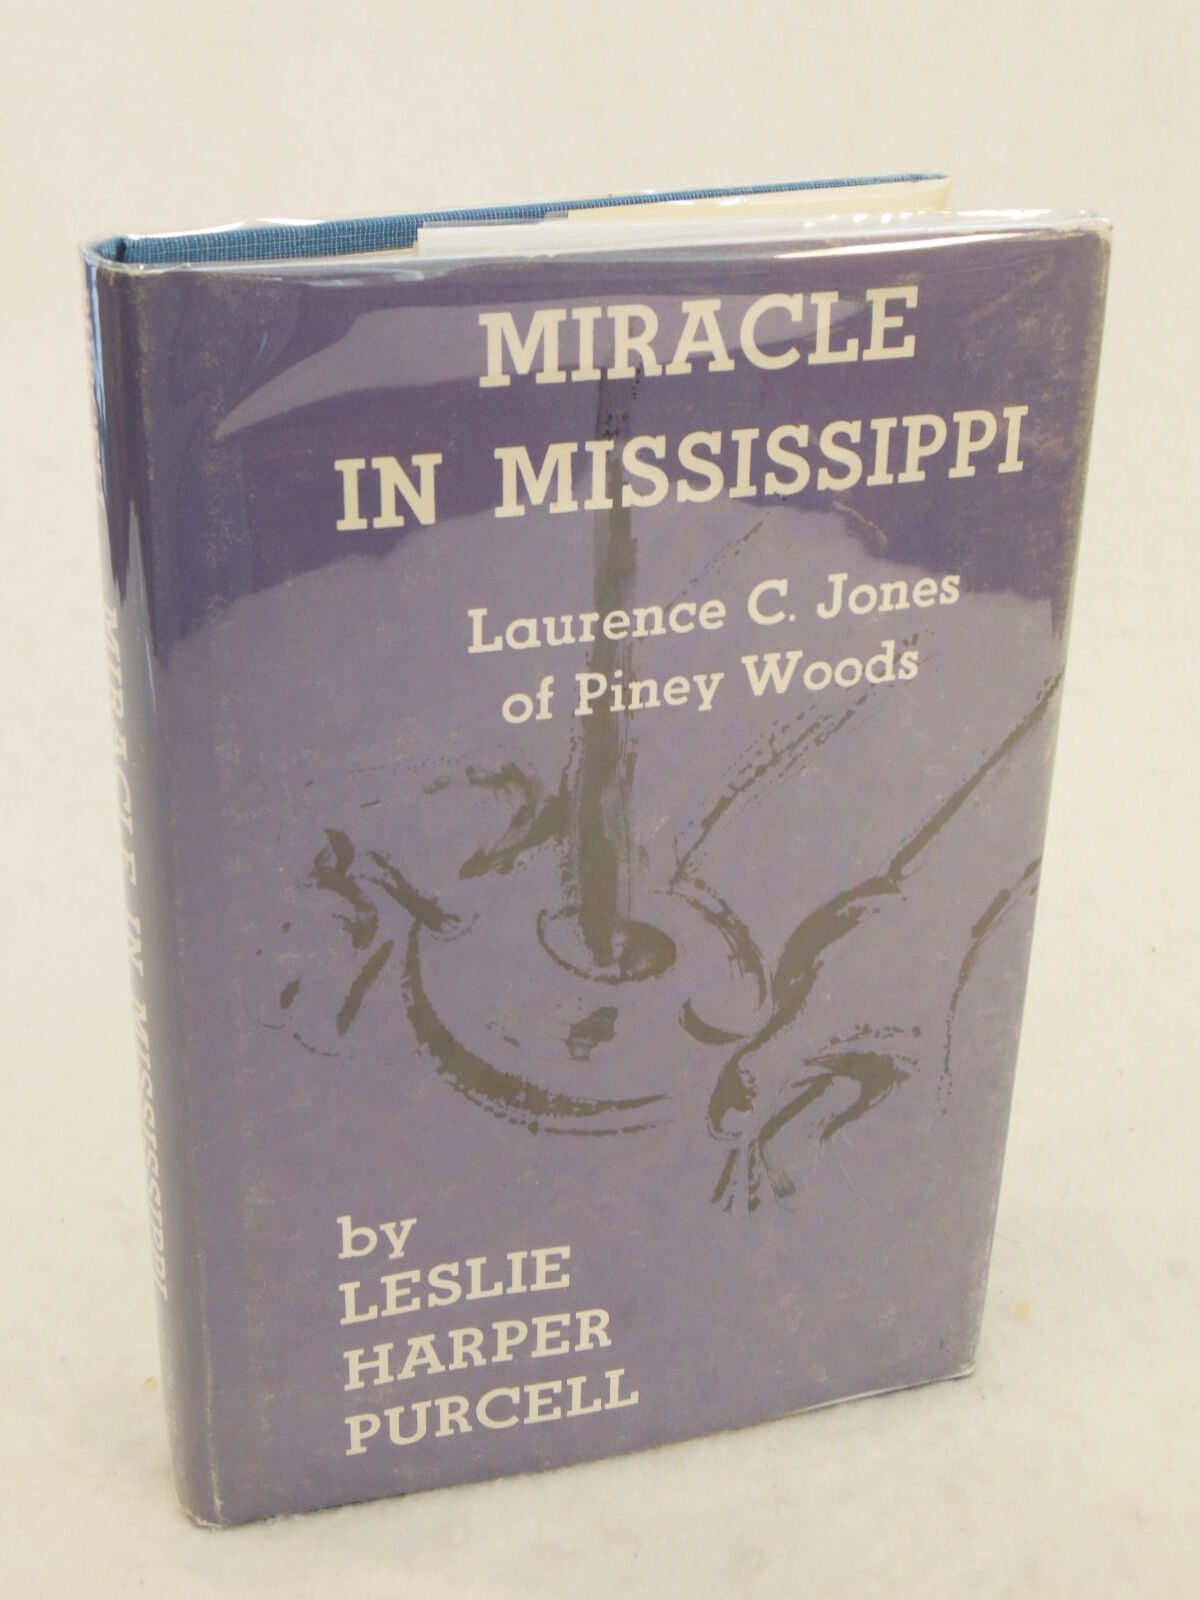 Leslie Harper Purcell MIRACLE IN MISSISSIPPI : LAURENCE C. JONES Carlton c.1956